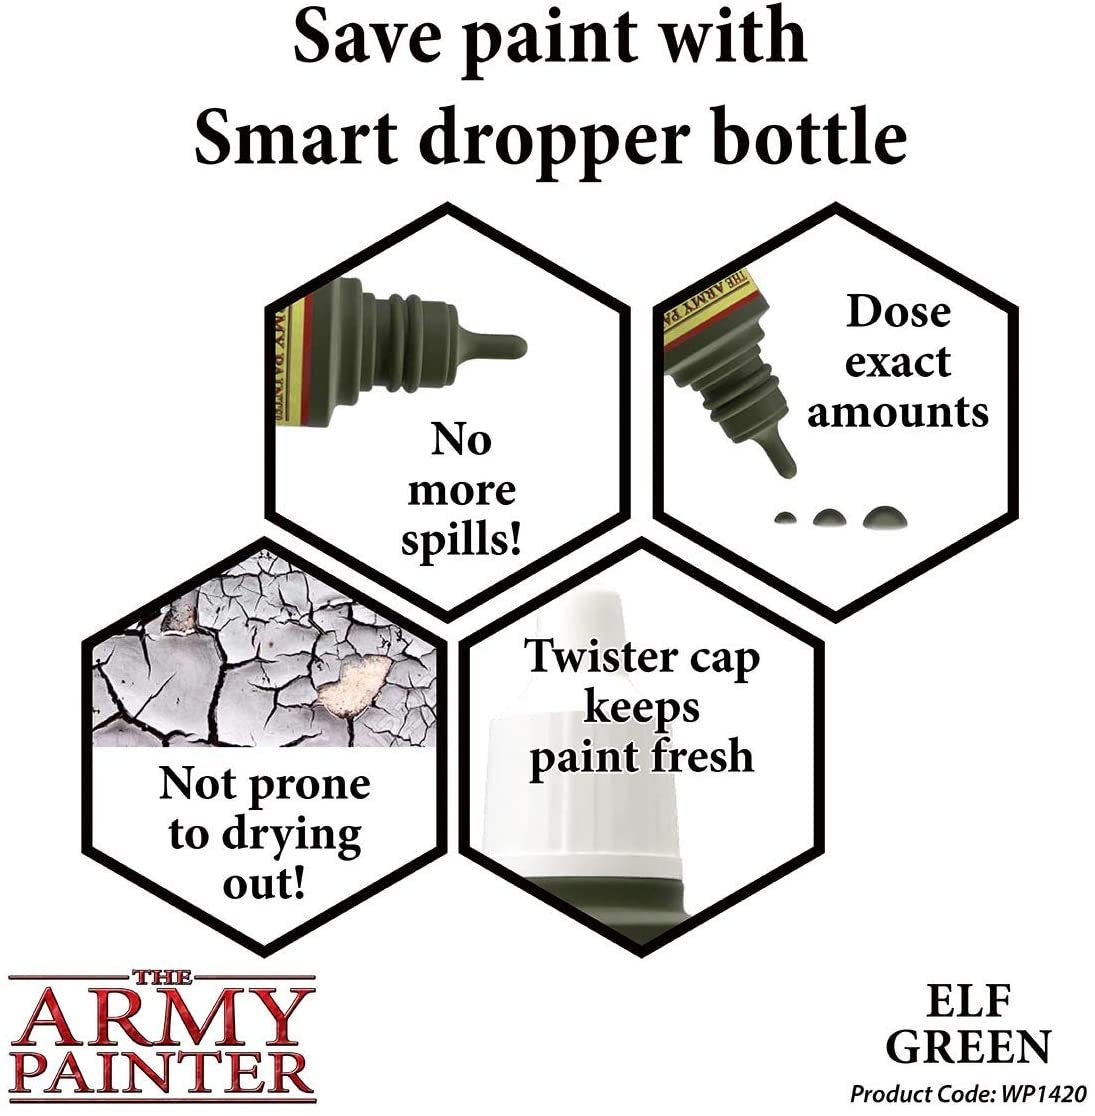 The Army Painter - Warpaints: Elf Green (18ml/0.6oz)